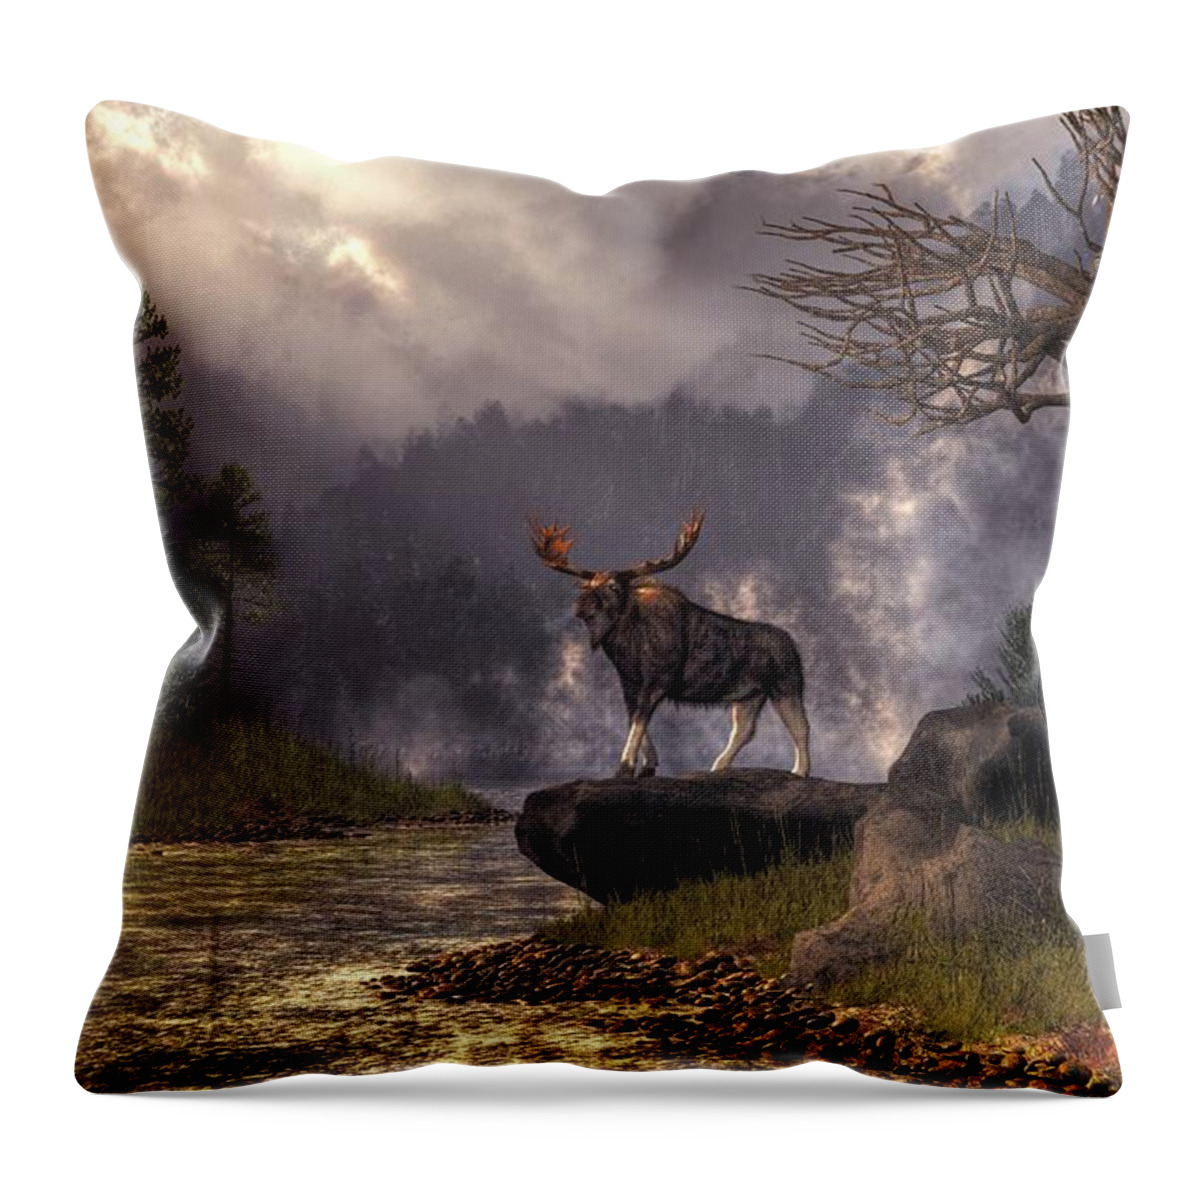 Moose In The Adirondacks Throw Pillow featuring the digital art Moose in the Adirondacks by Daniel Eskridge